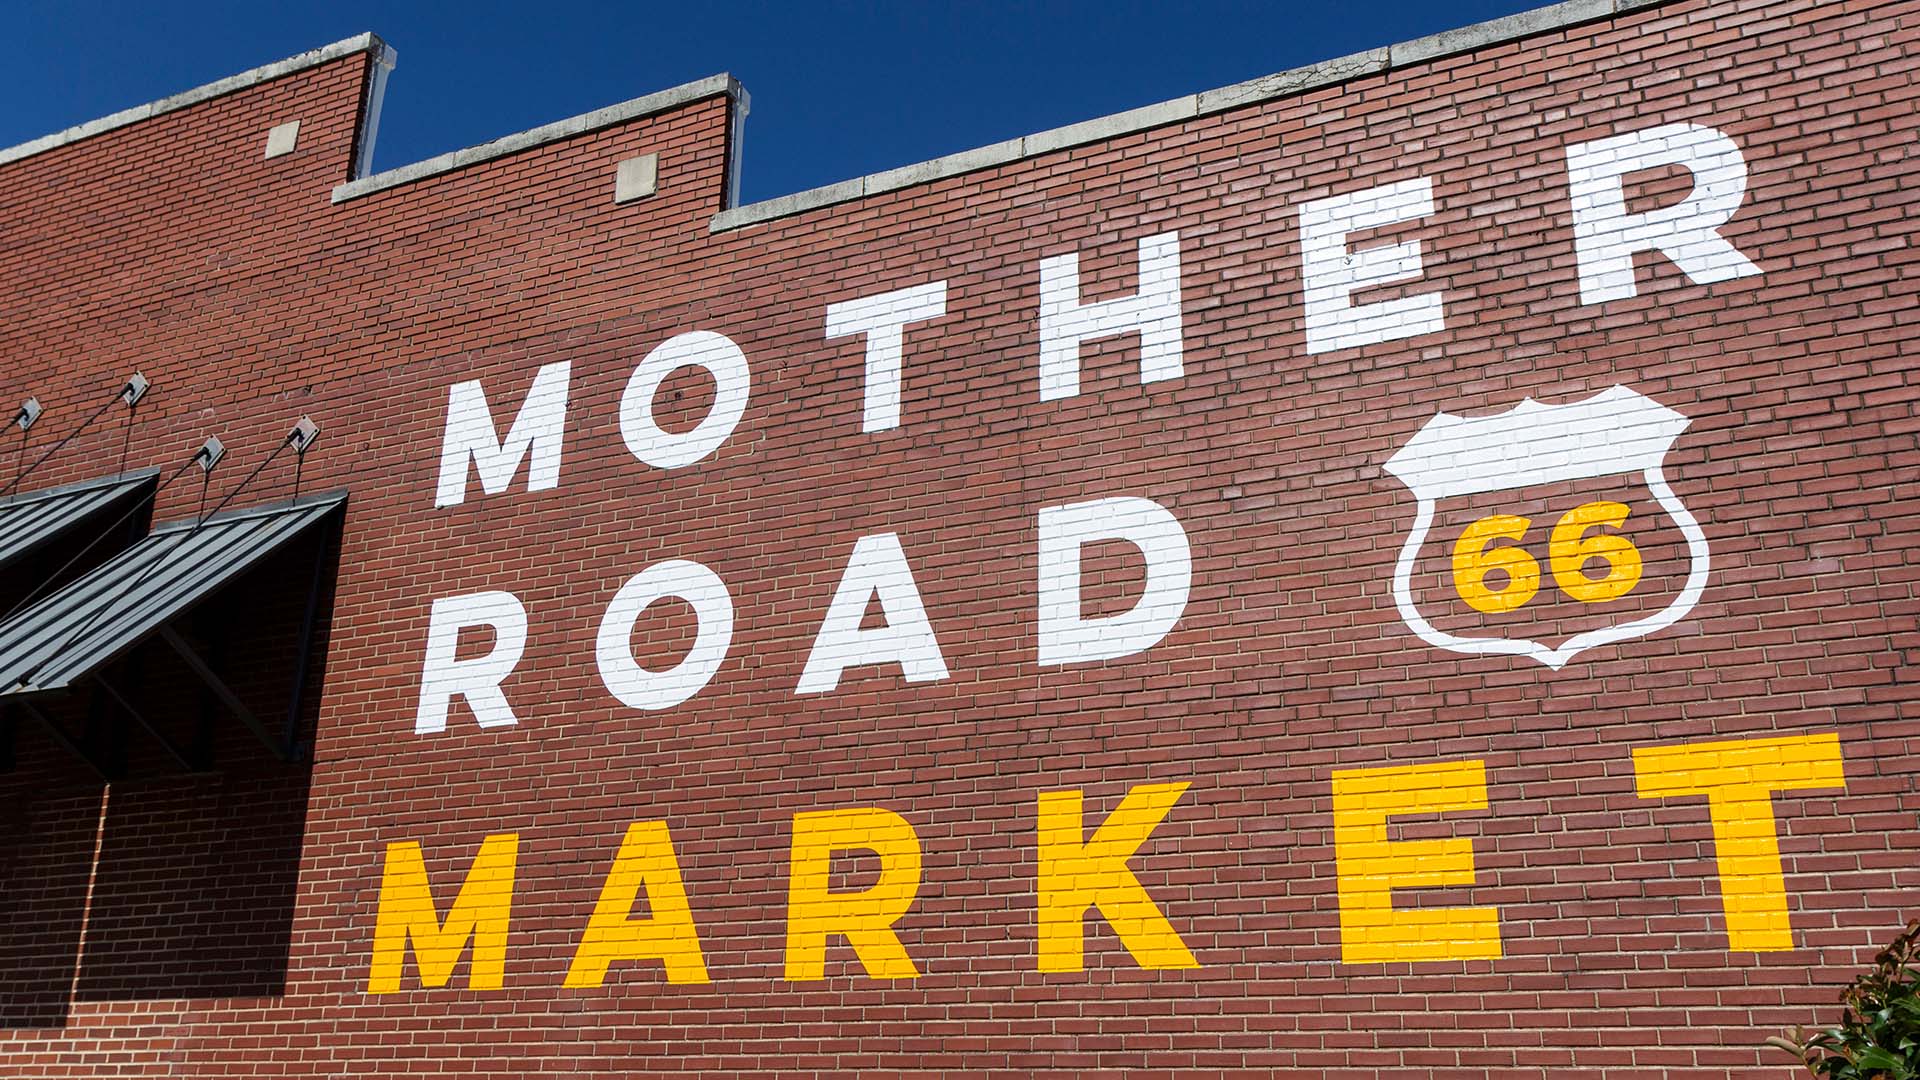 Mother Road Market in Tulsa, Oklahoma